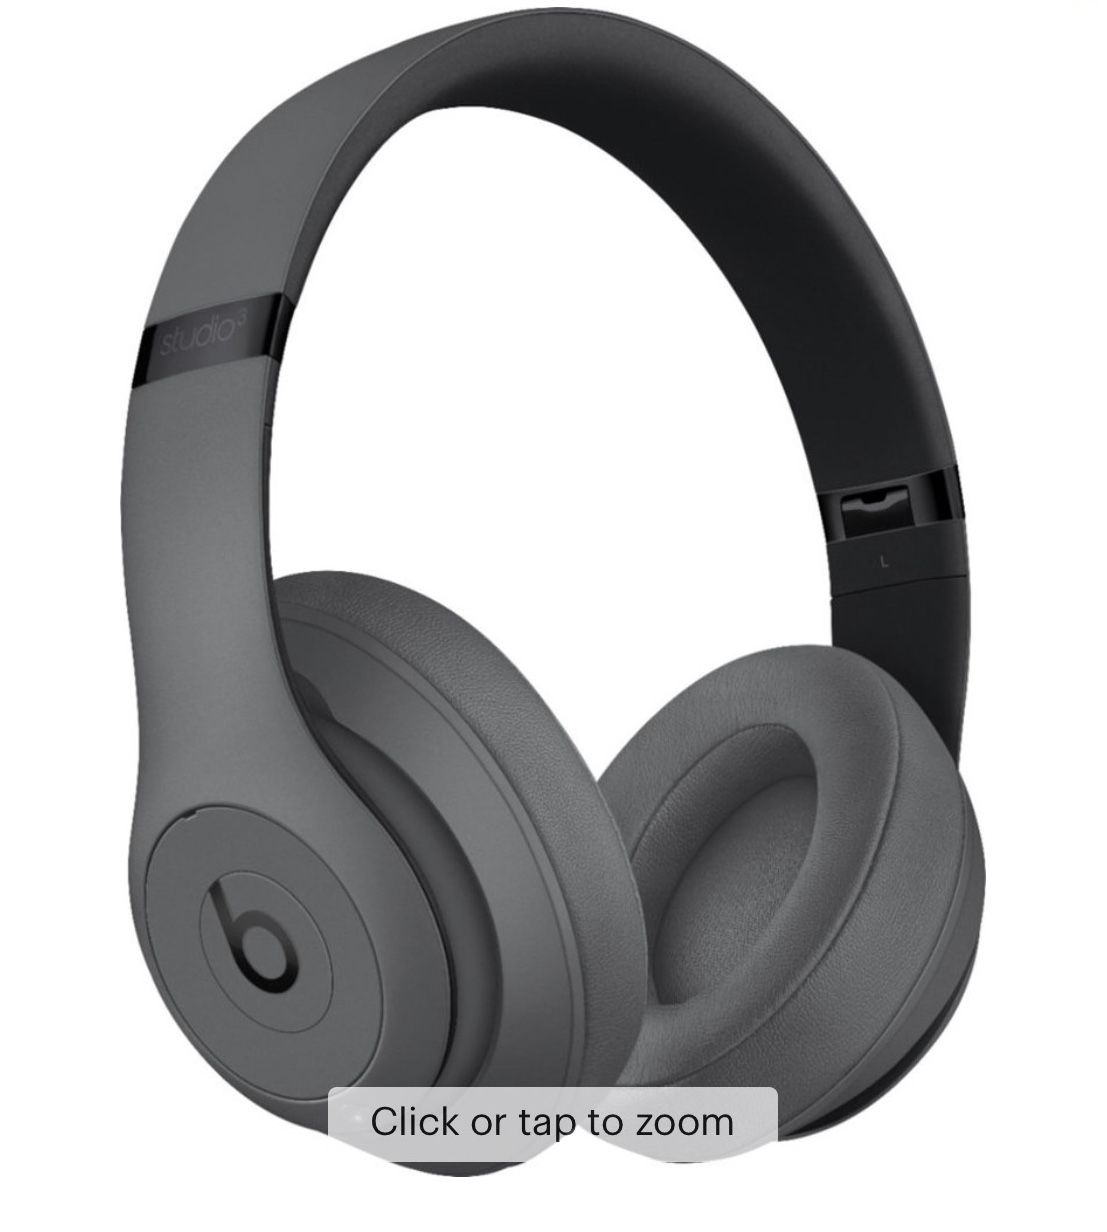 Beats by Dr. Dre - Beats Studio 3 Wireless Noise Canceling Headphones. For $270